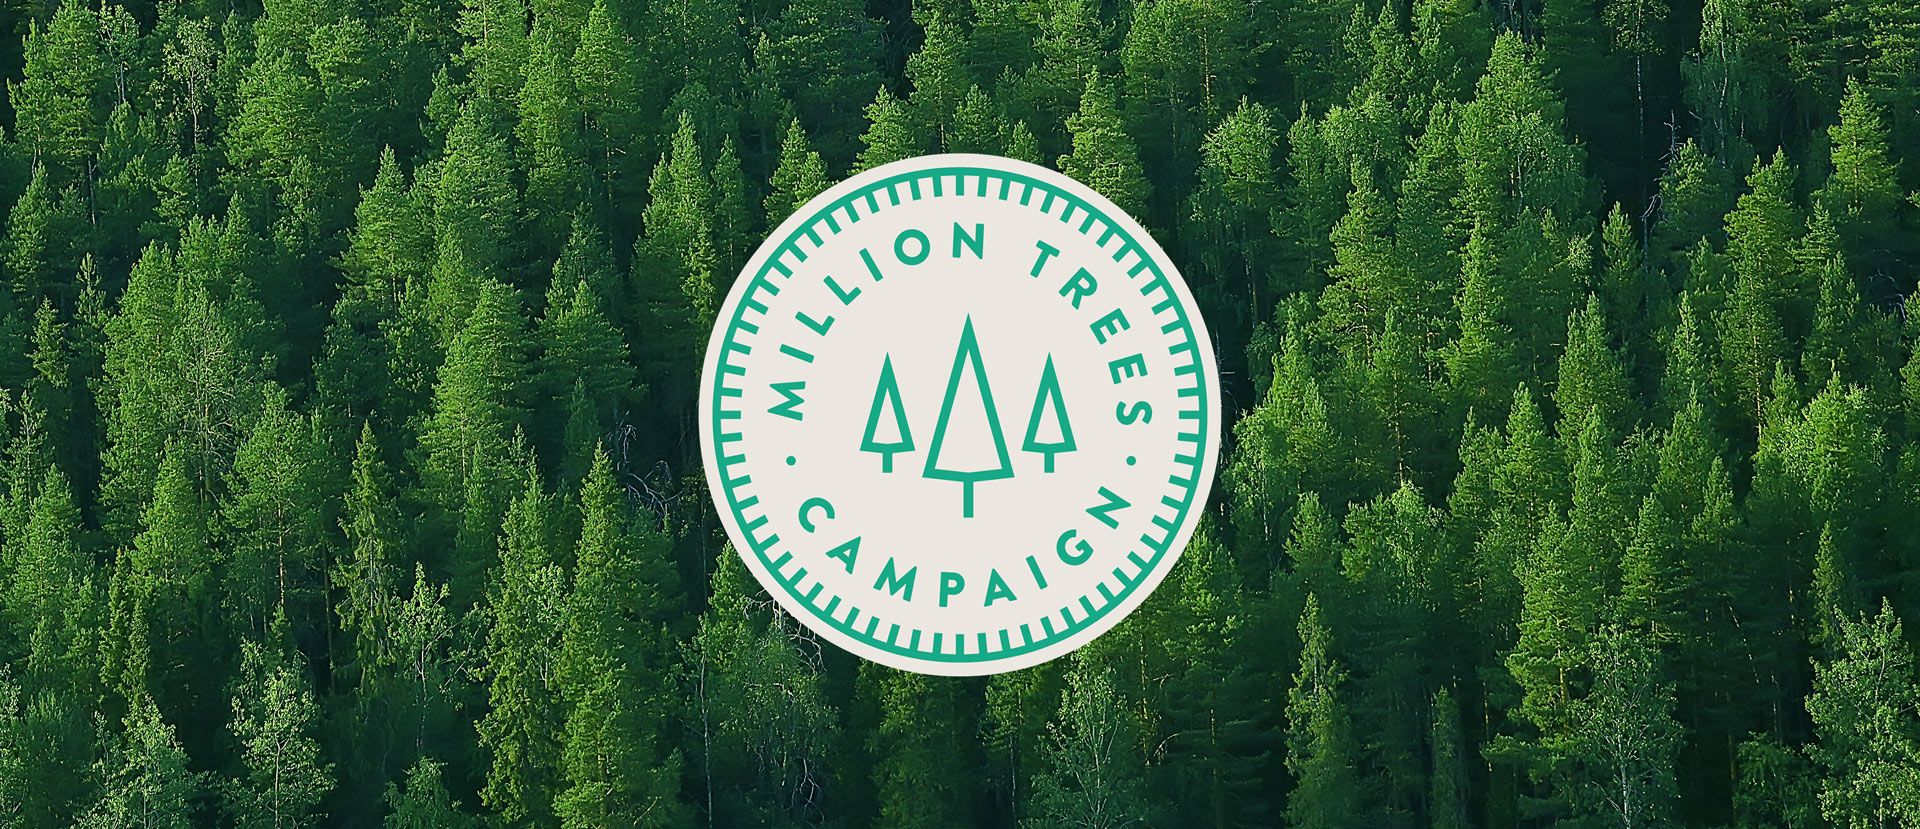 Million Trees Campaign